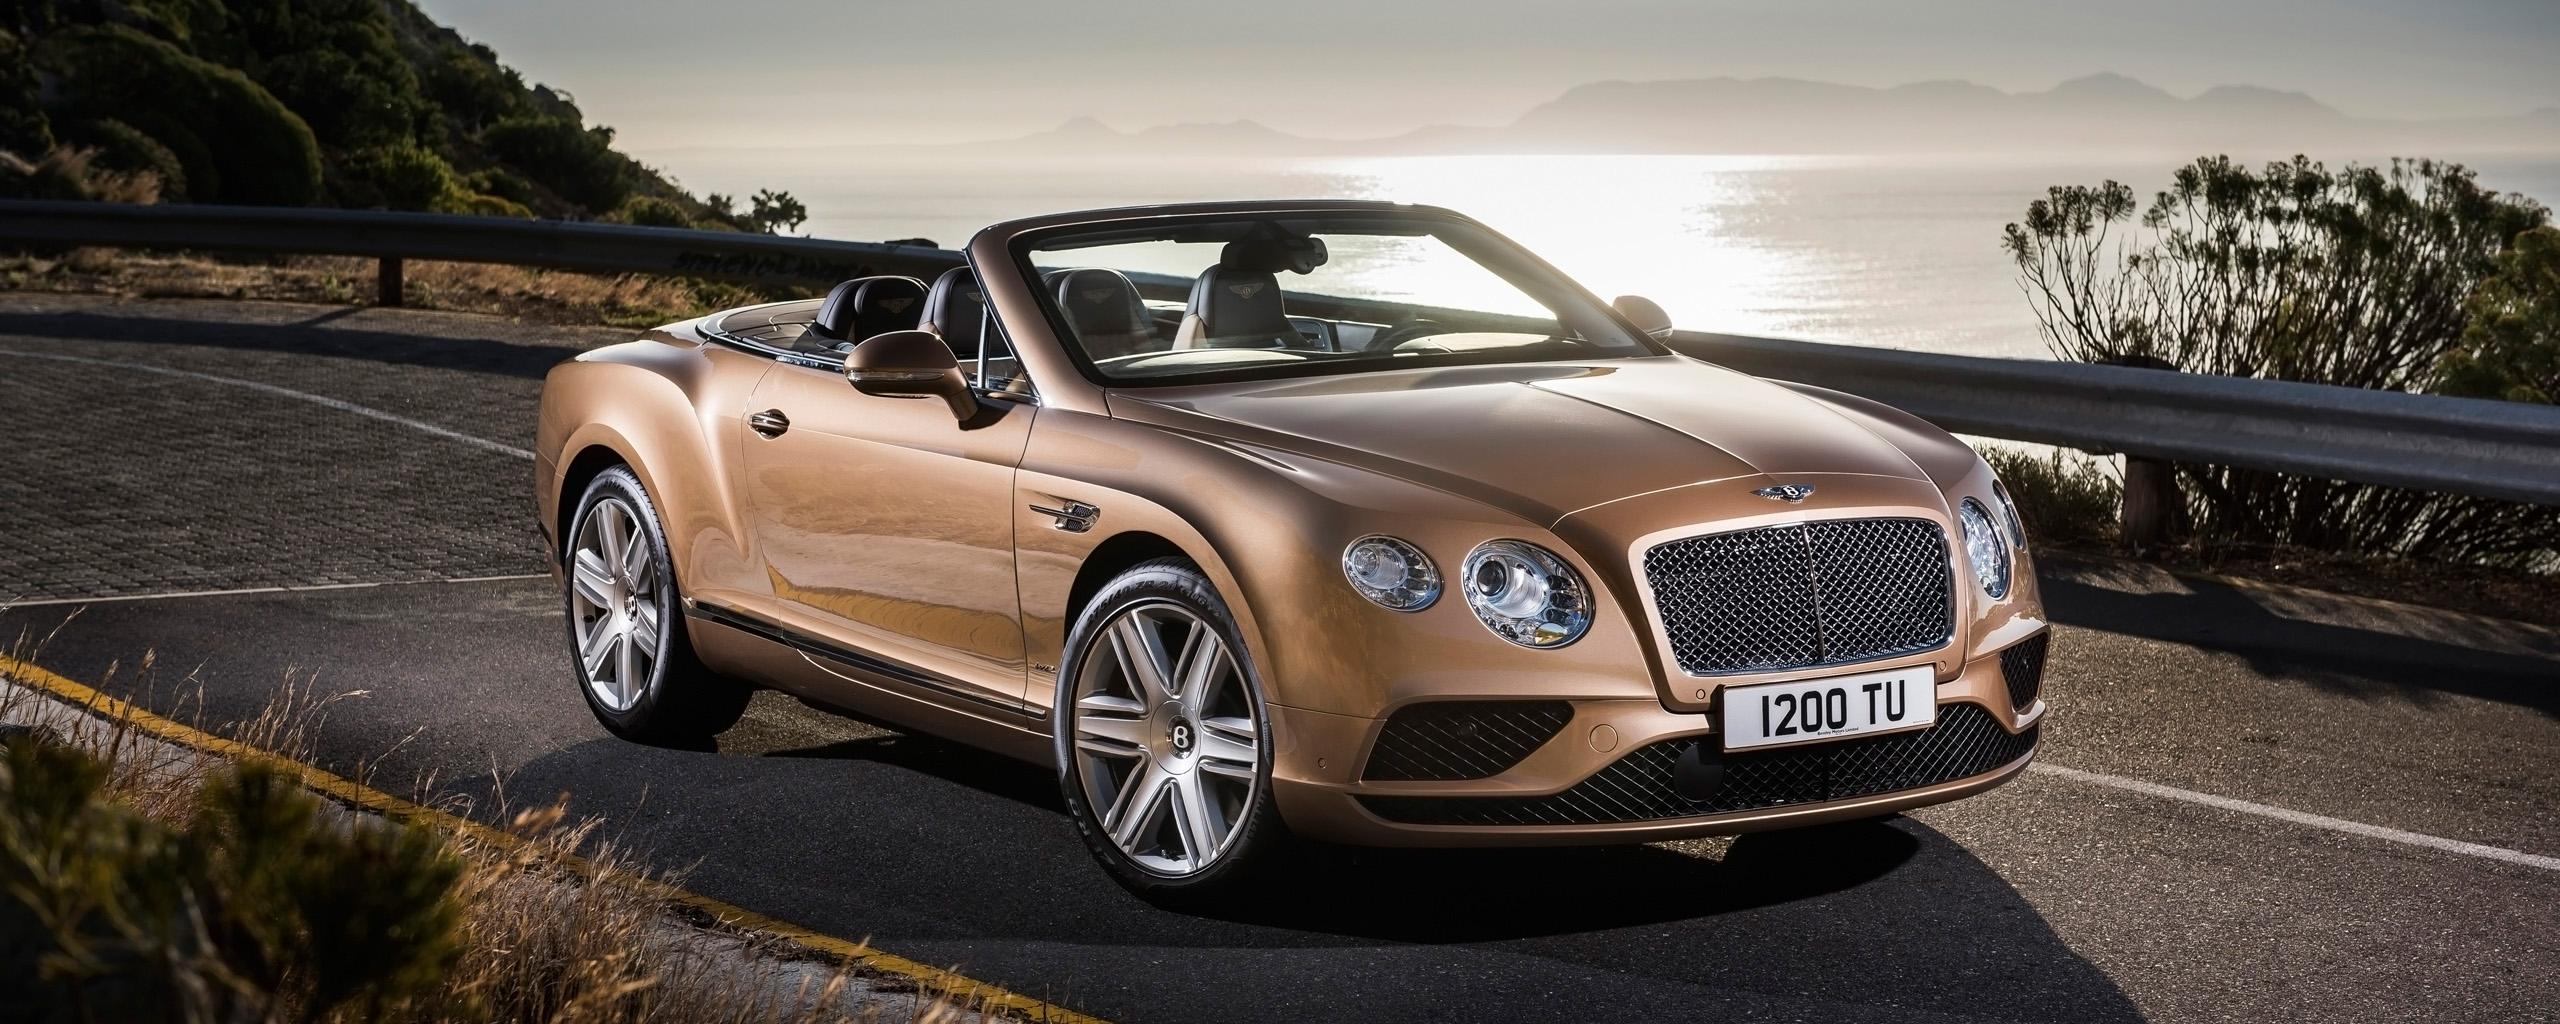 Download Wallpaper 2560x1024 Bentley continental gt convertible 2015